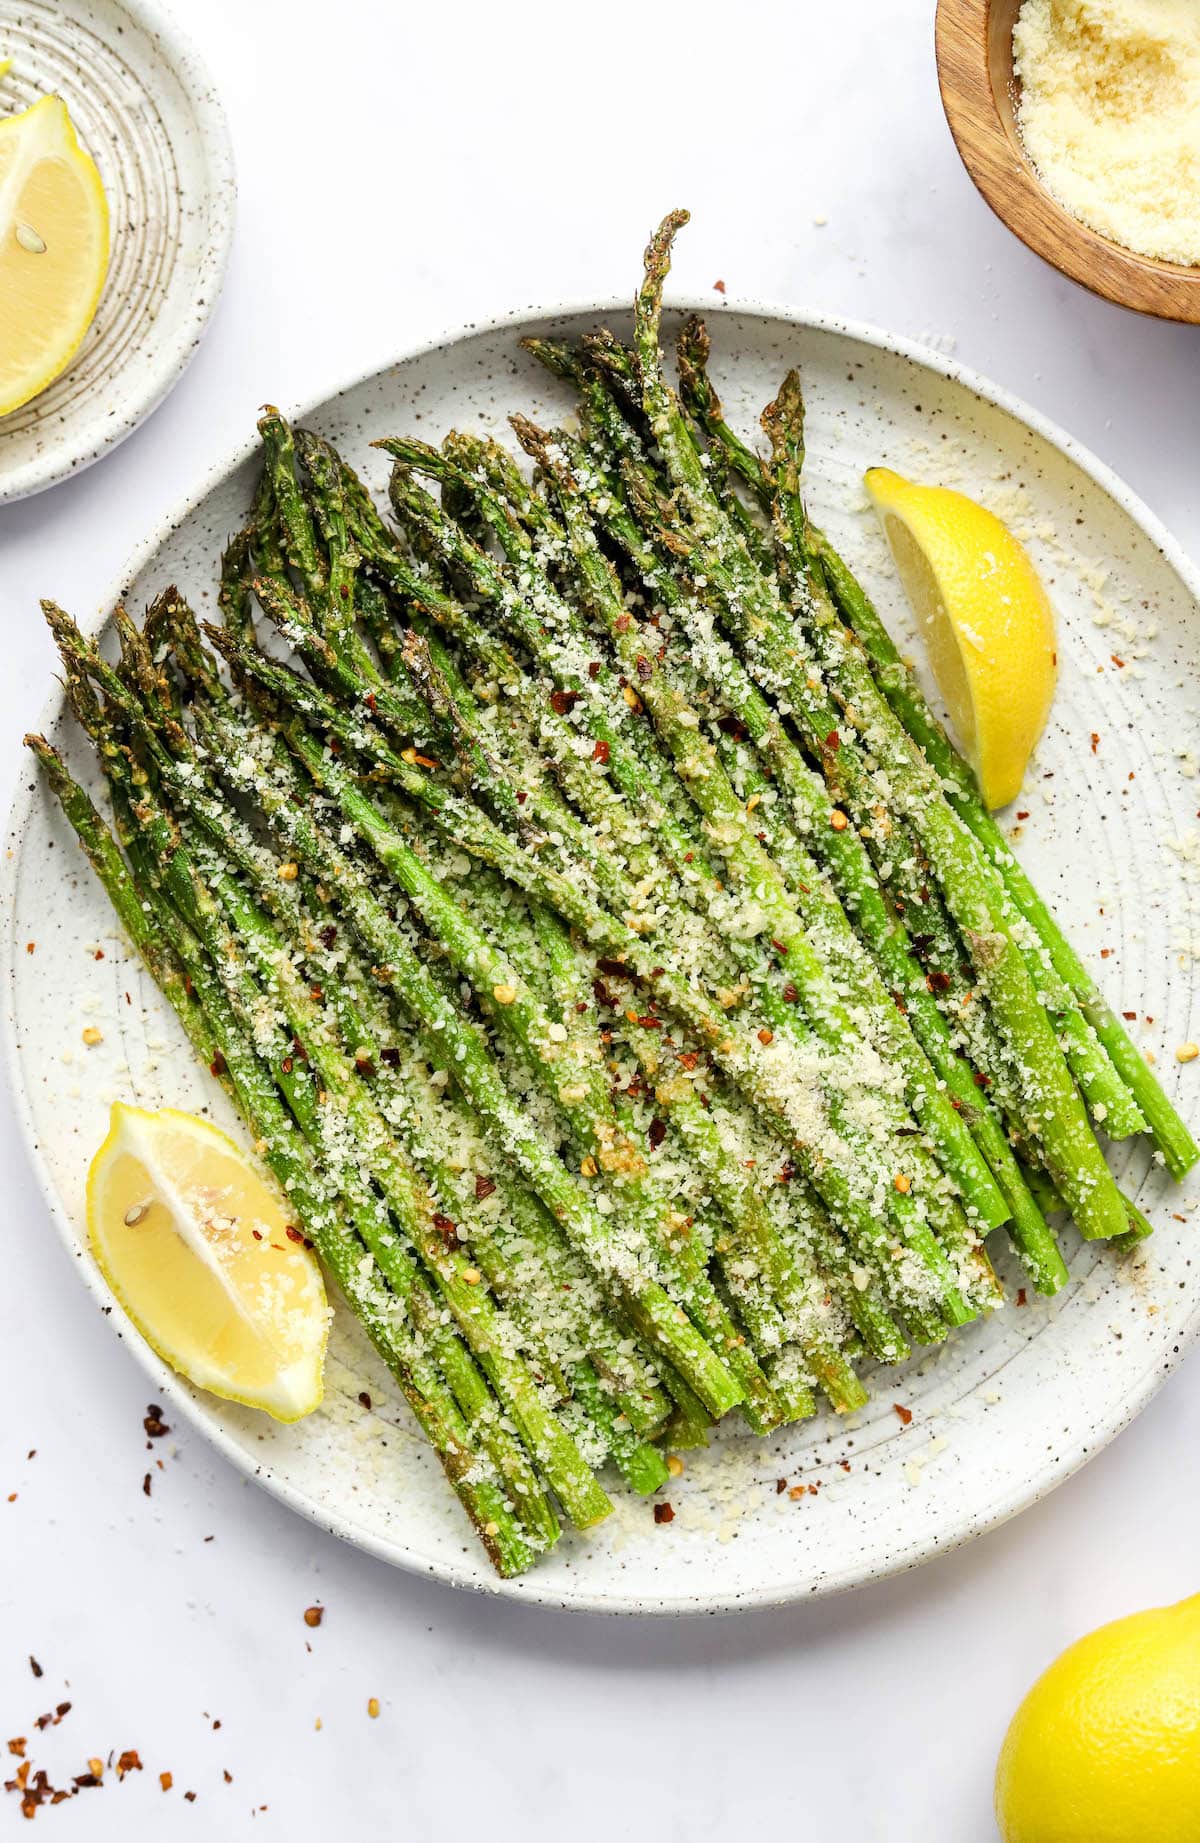 https://www.eatingbirdfood.com/wp-content/uploads/2022/02/air-fryer-asparagus-hero.jpg